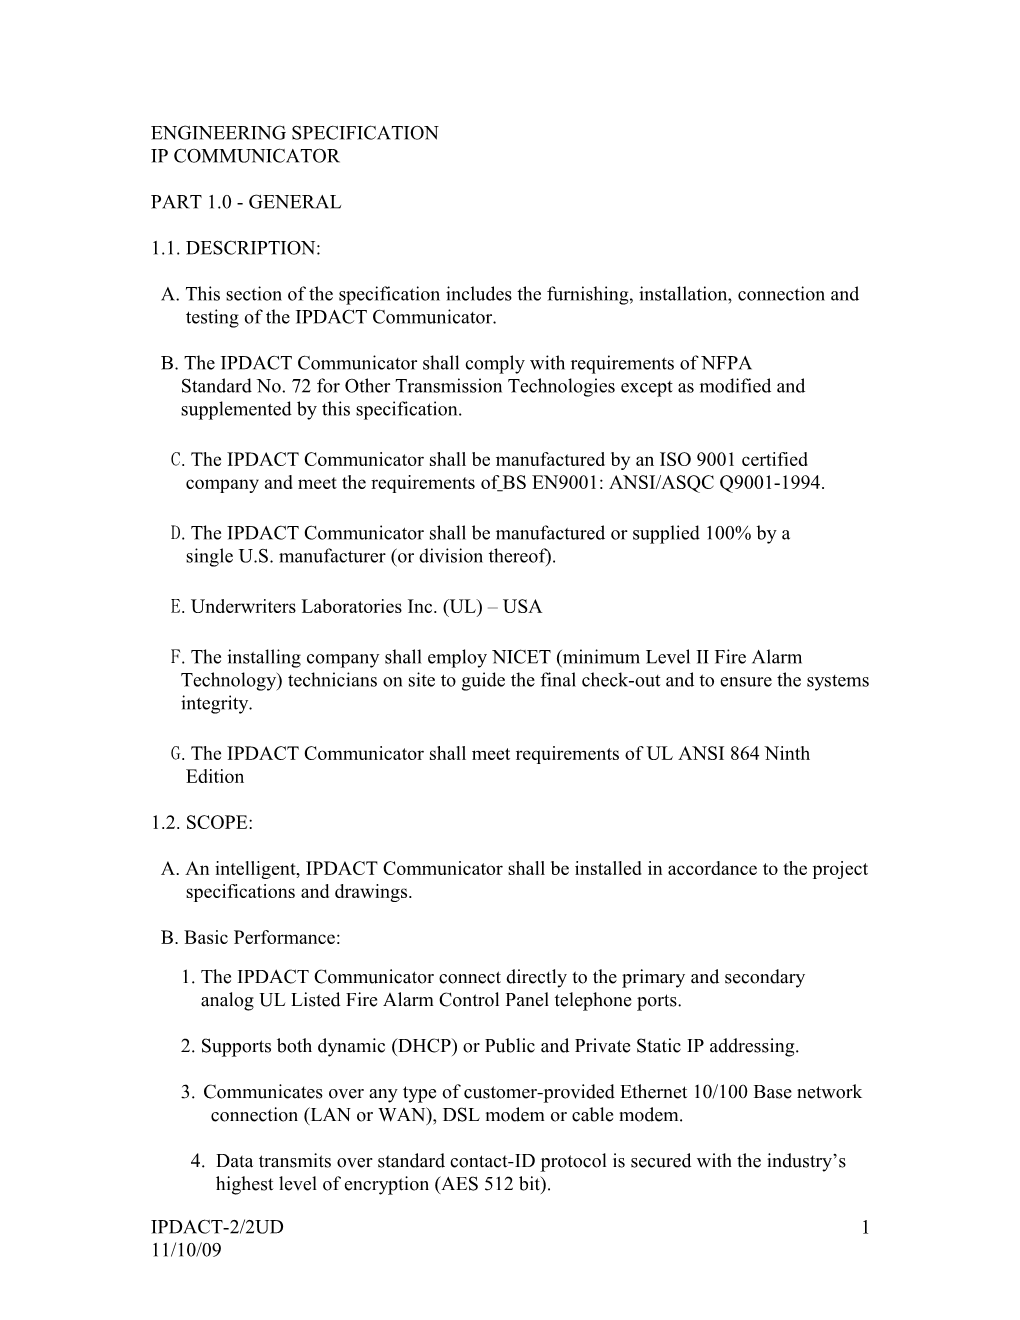 IPDACT-2(UD) Communicator (Microsoft Word Format)